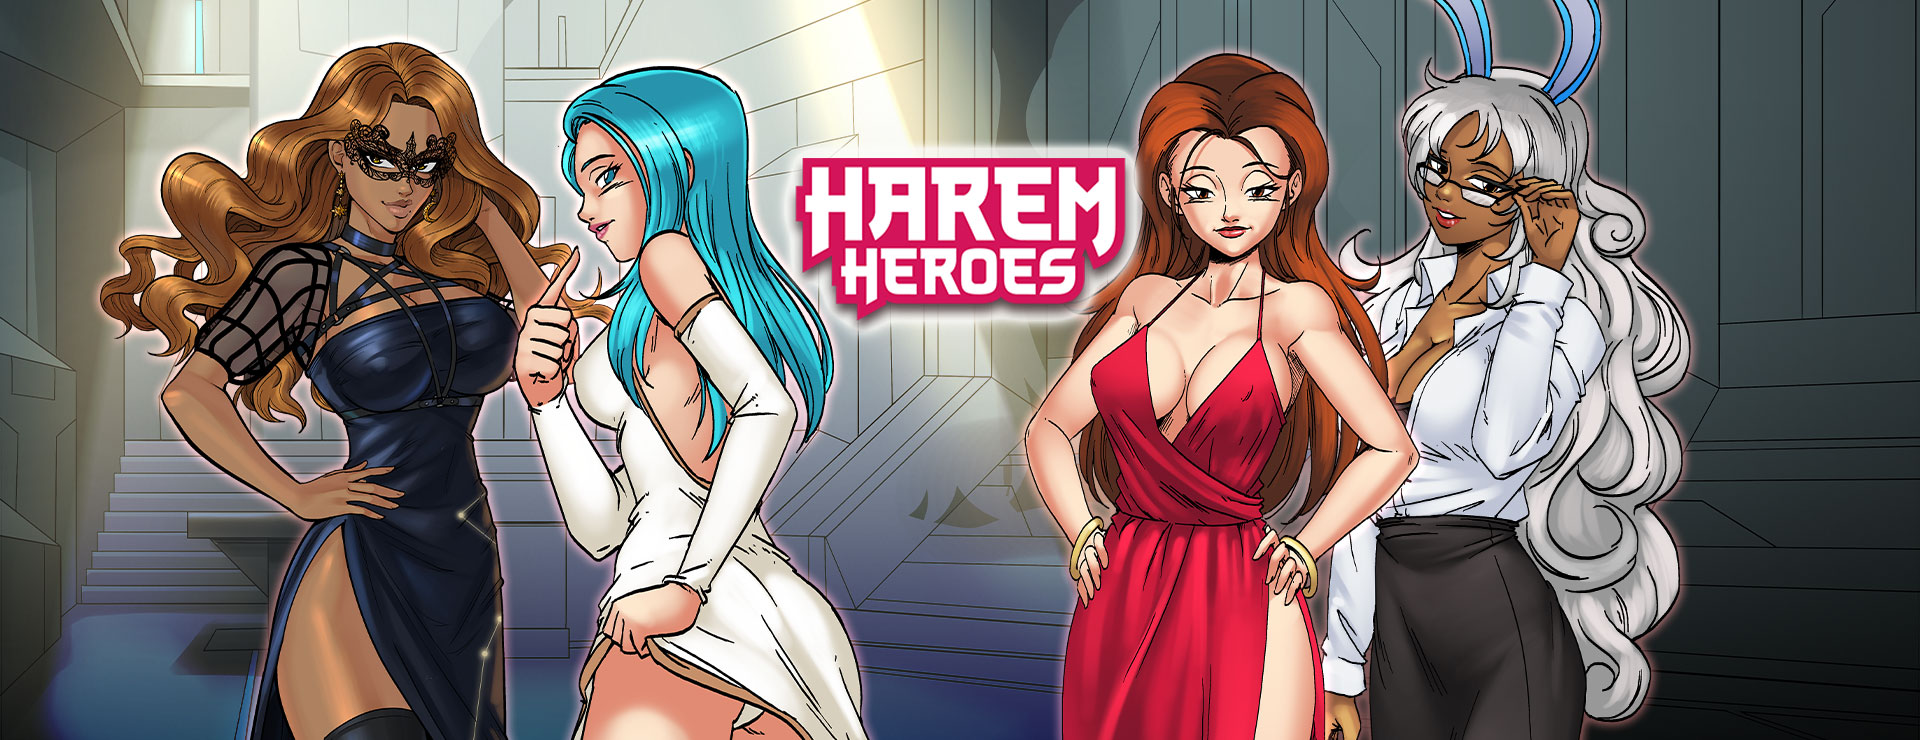 Harem Heroes Game - Action Adventure Spiel